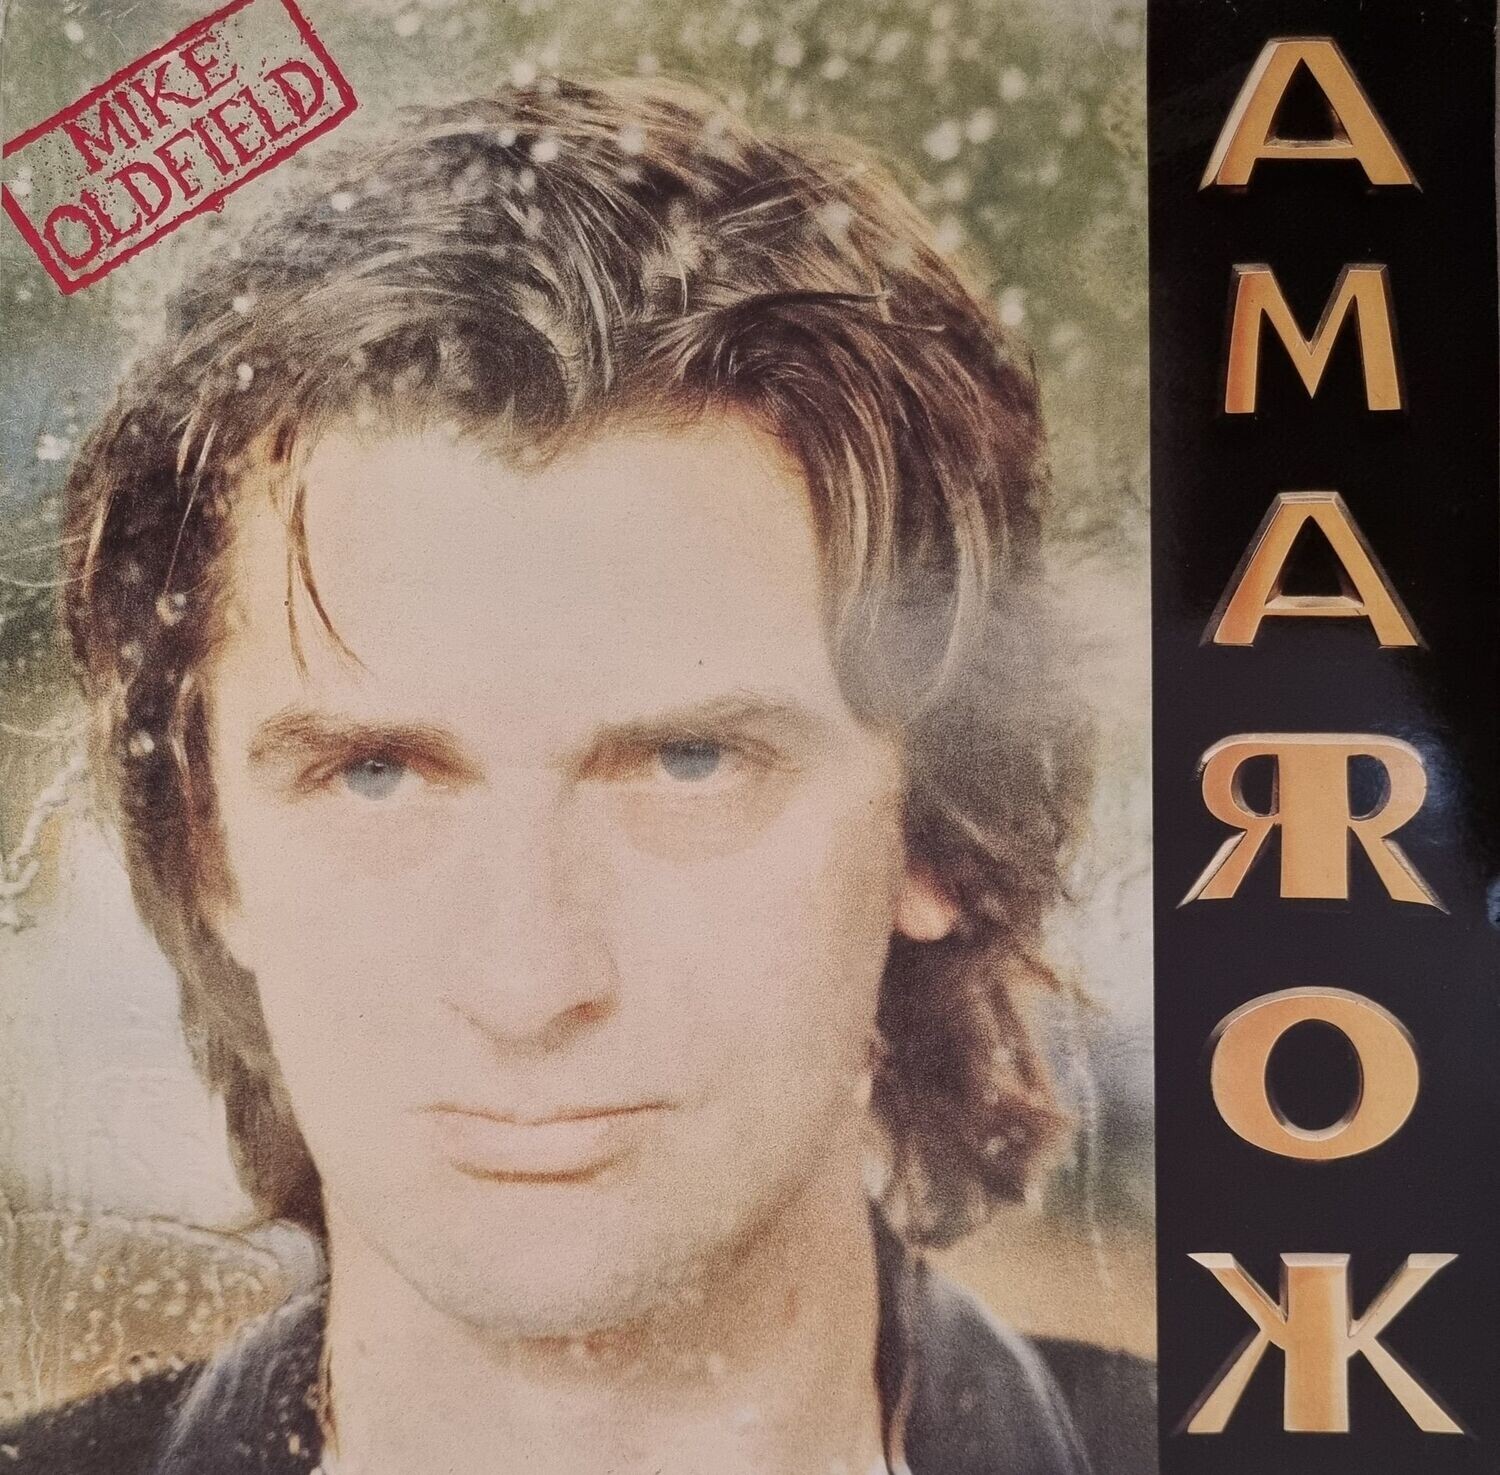 Mike Oldfield – Amarok (1990)